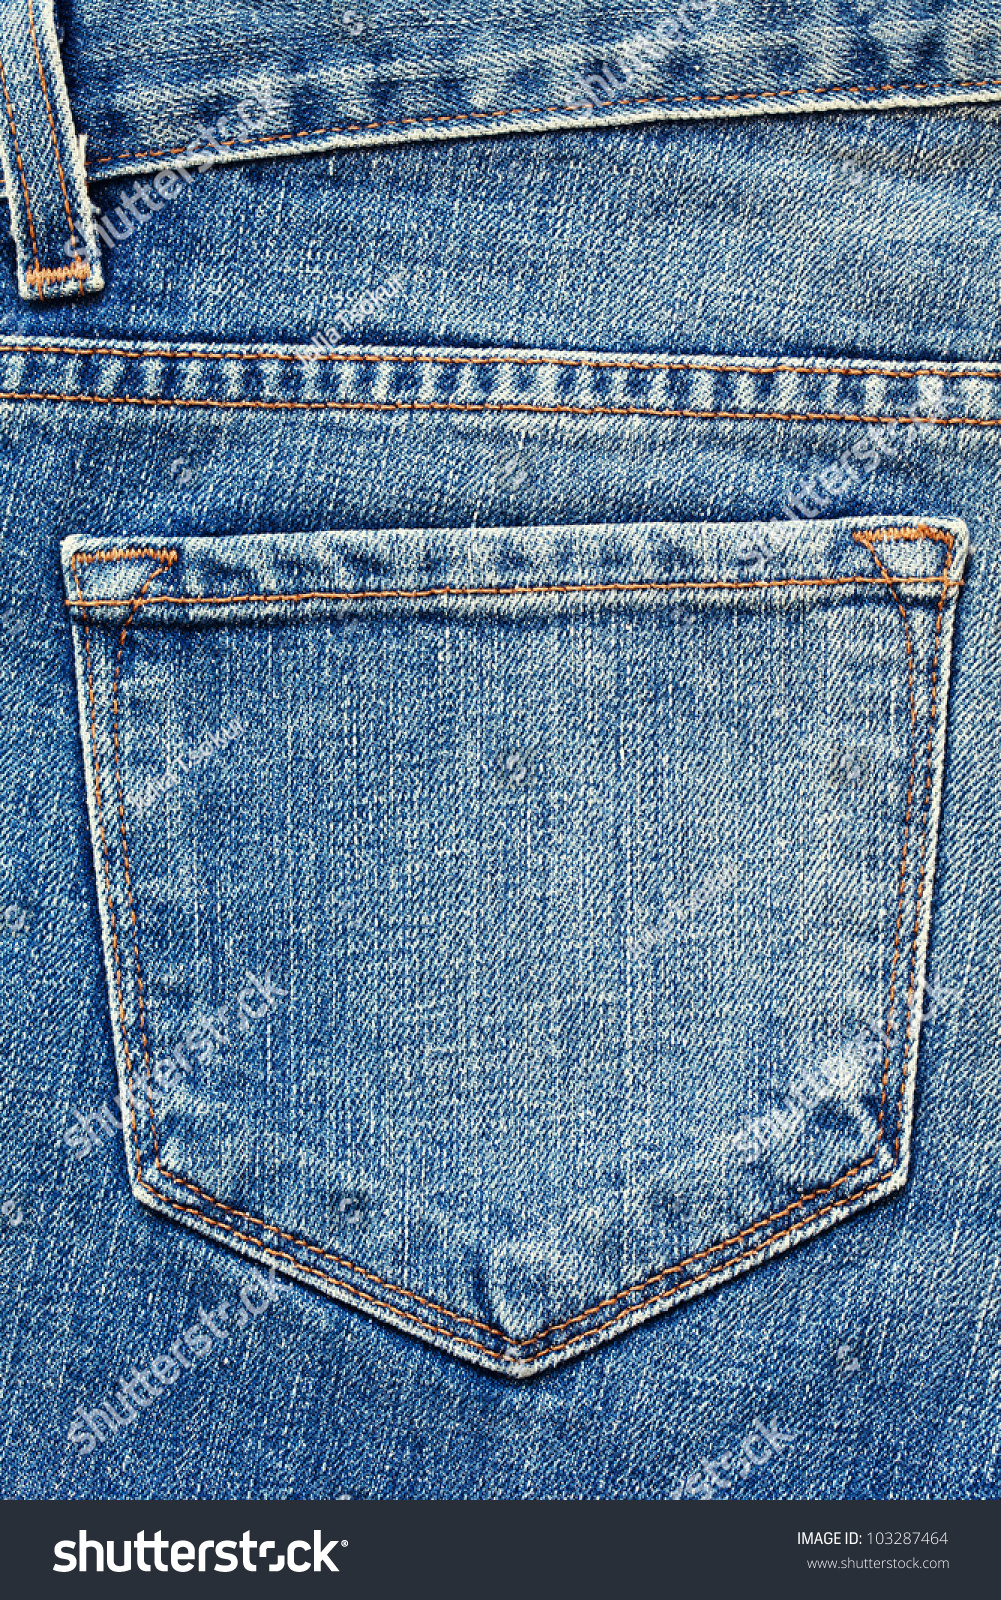 Blue Jeans Pocket Stock Photo 103287464 - Shutterstock